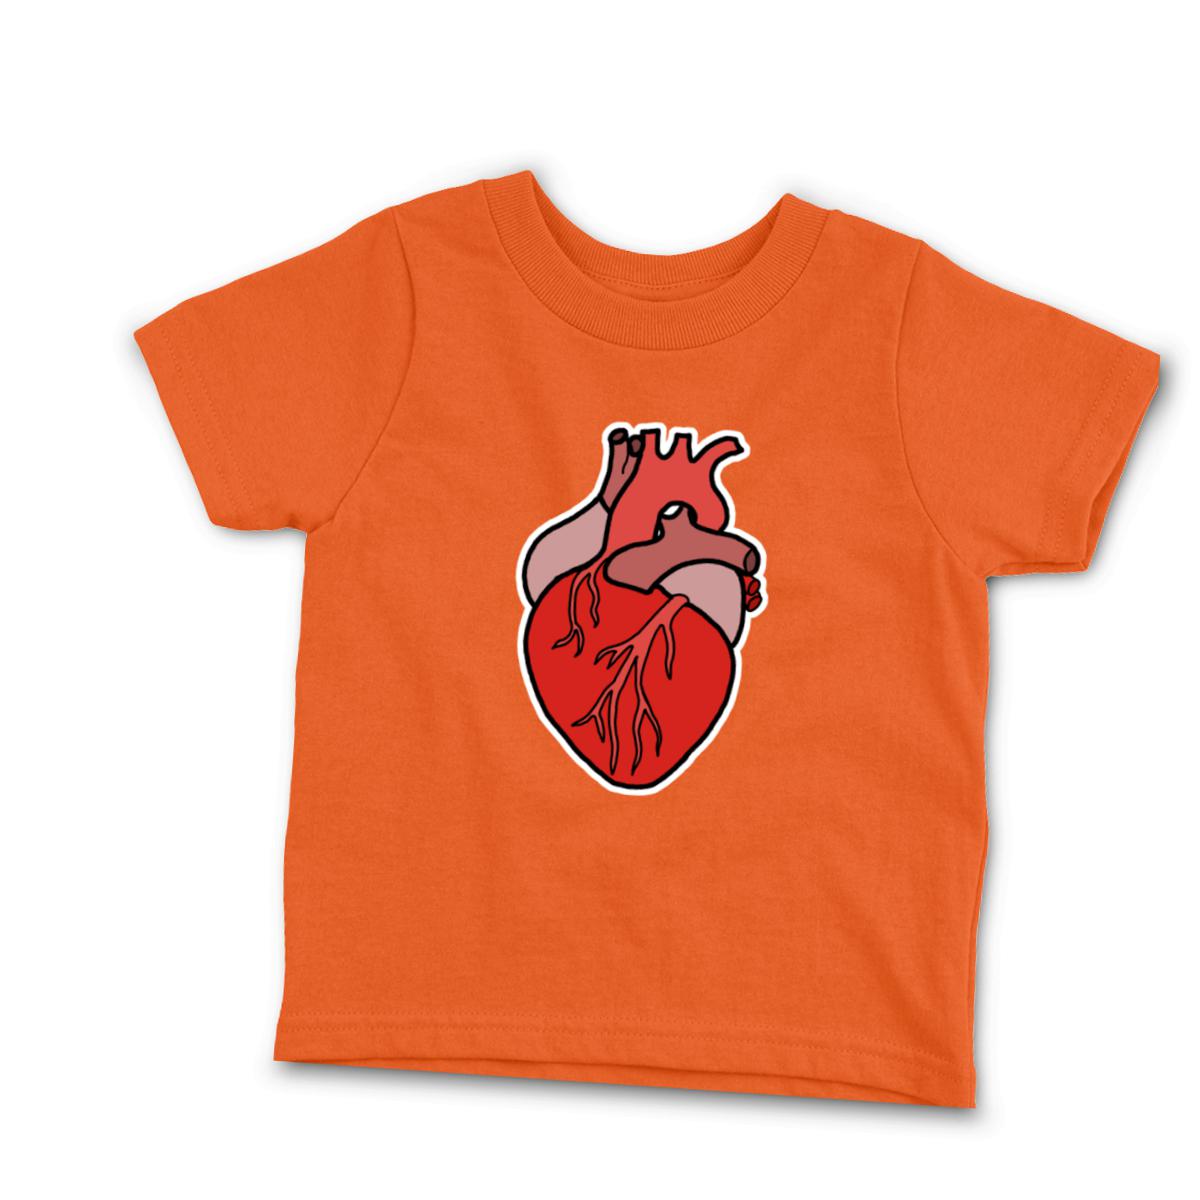 Illustrative Heart Toddler Tee 2T orange